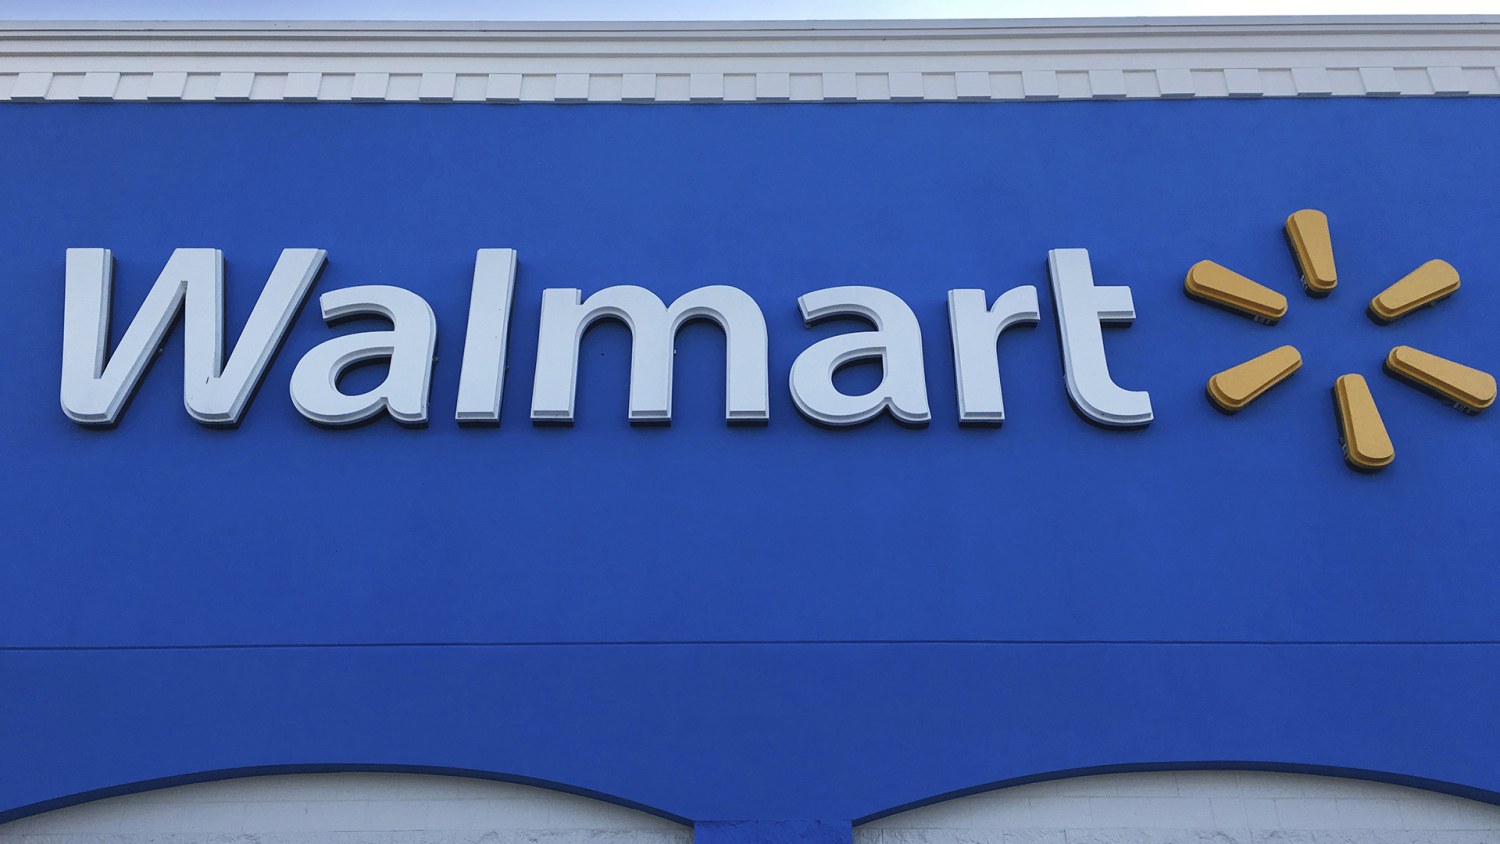 Walmart brings online grocery delivery via Uber to Orlando